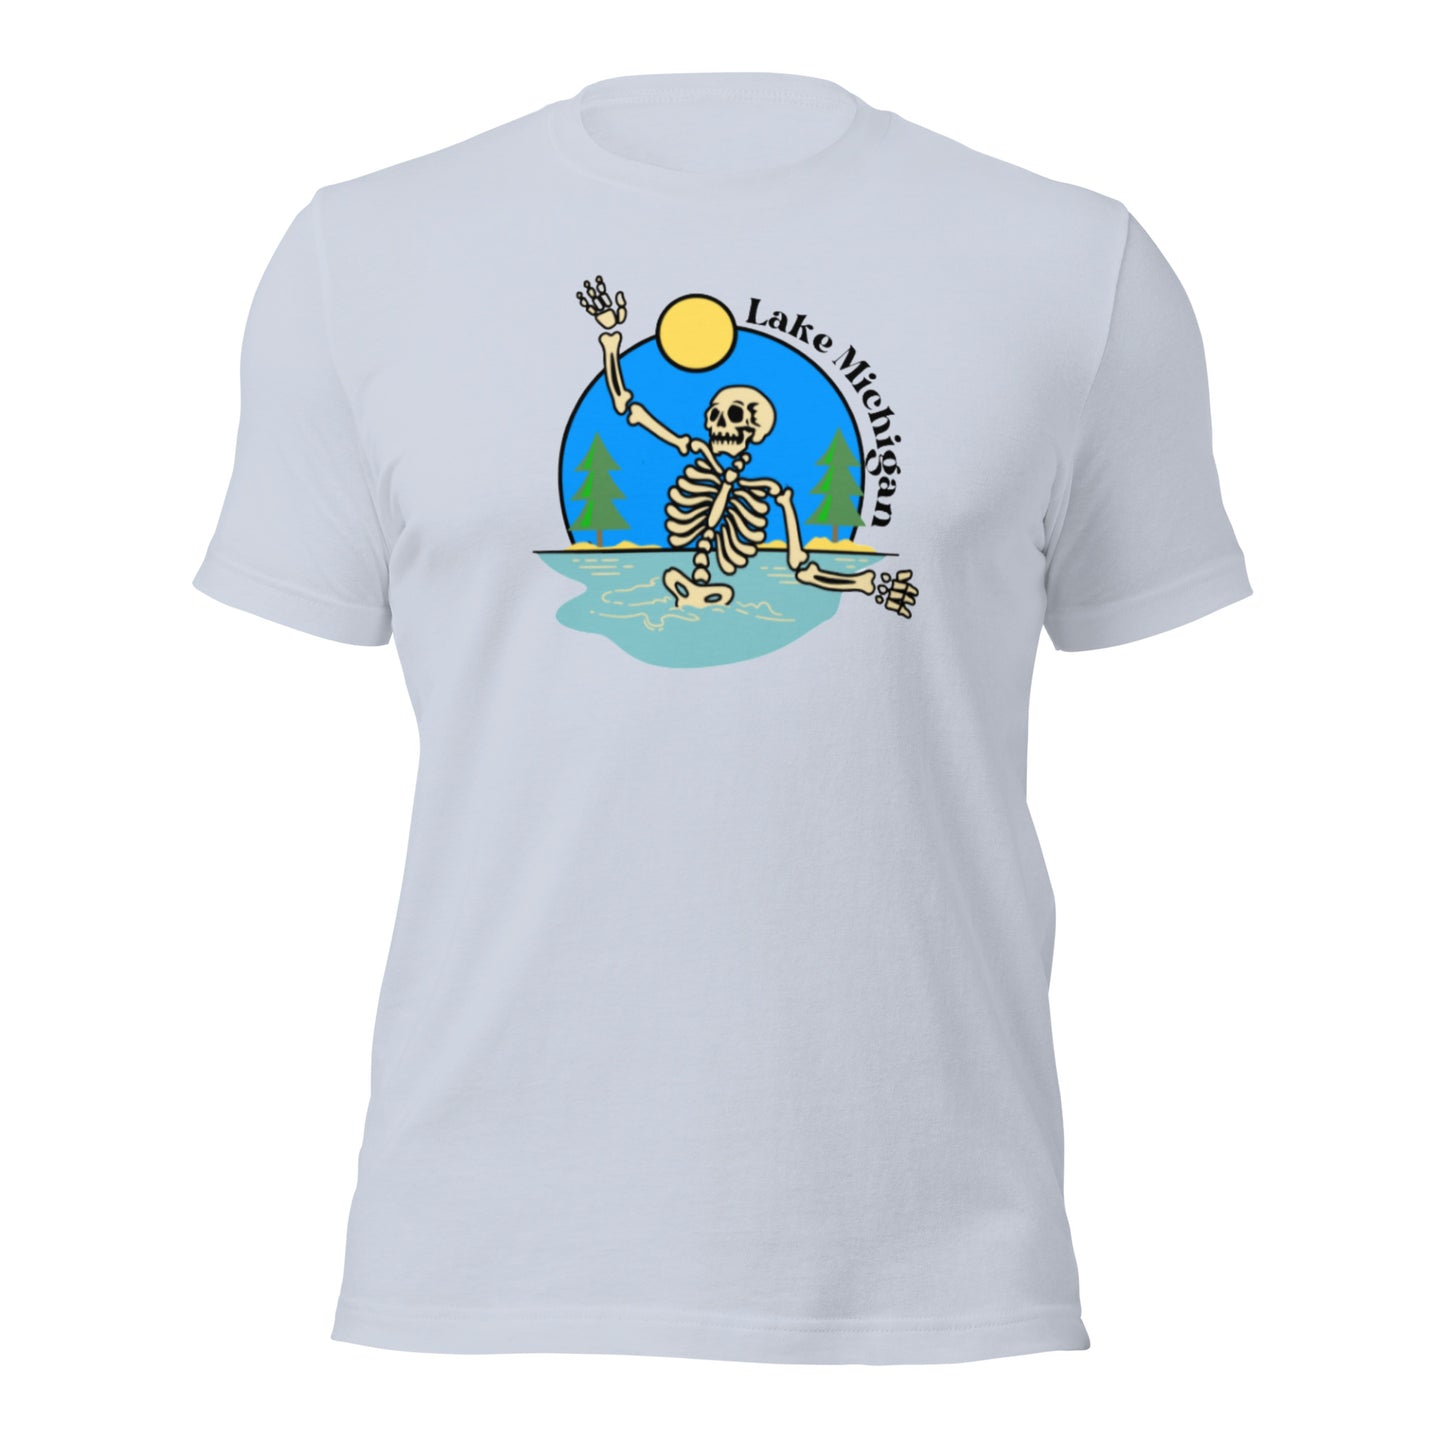 Lake Michigan unisex t-shirt